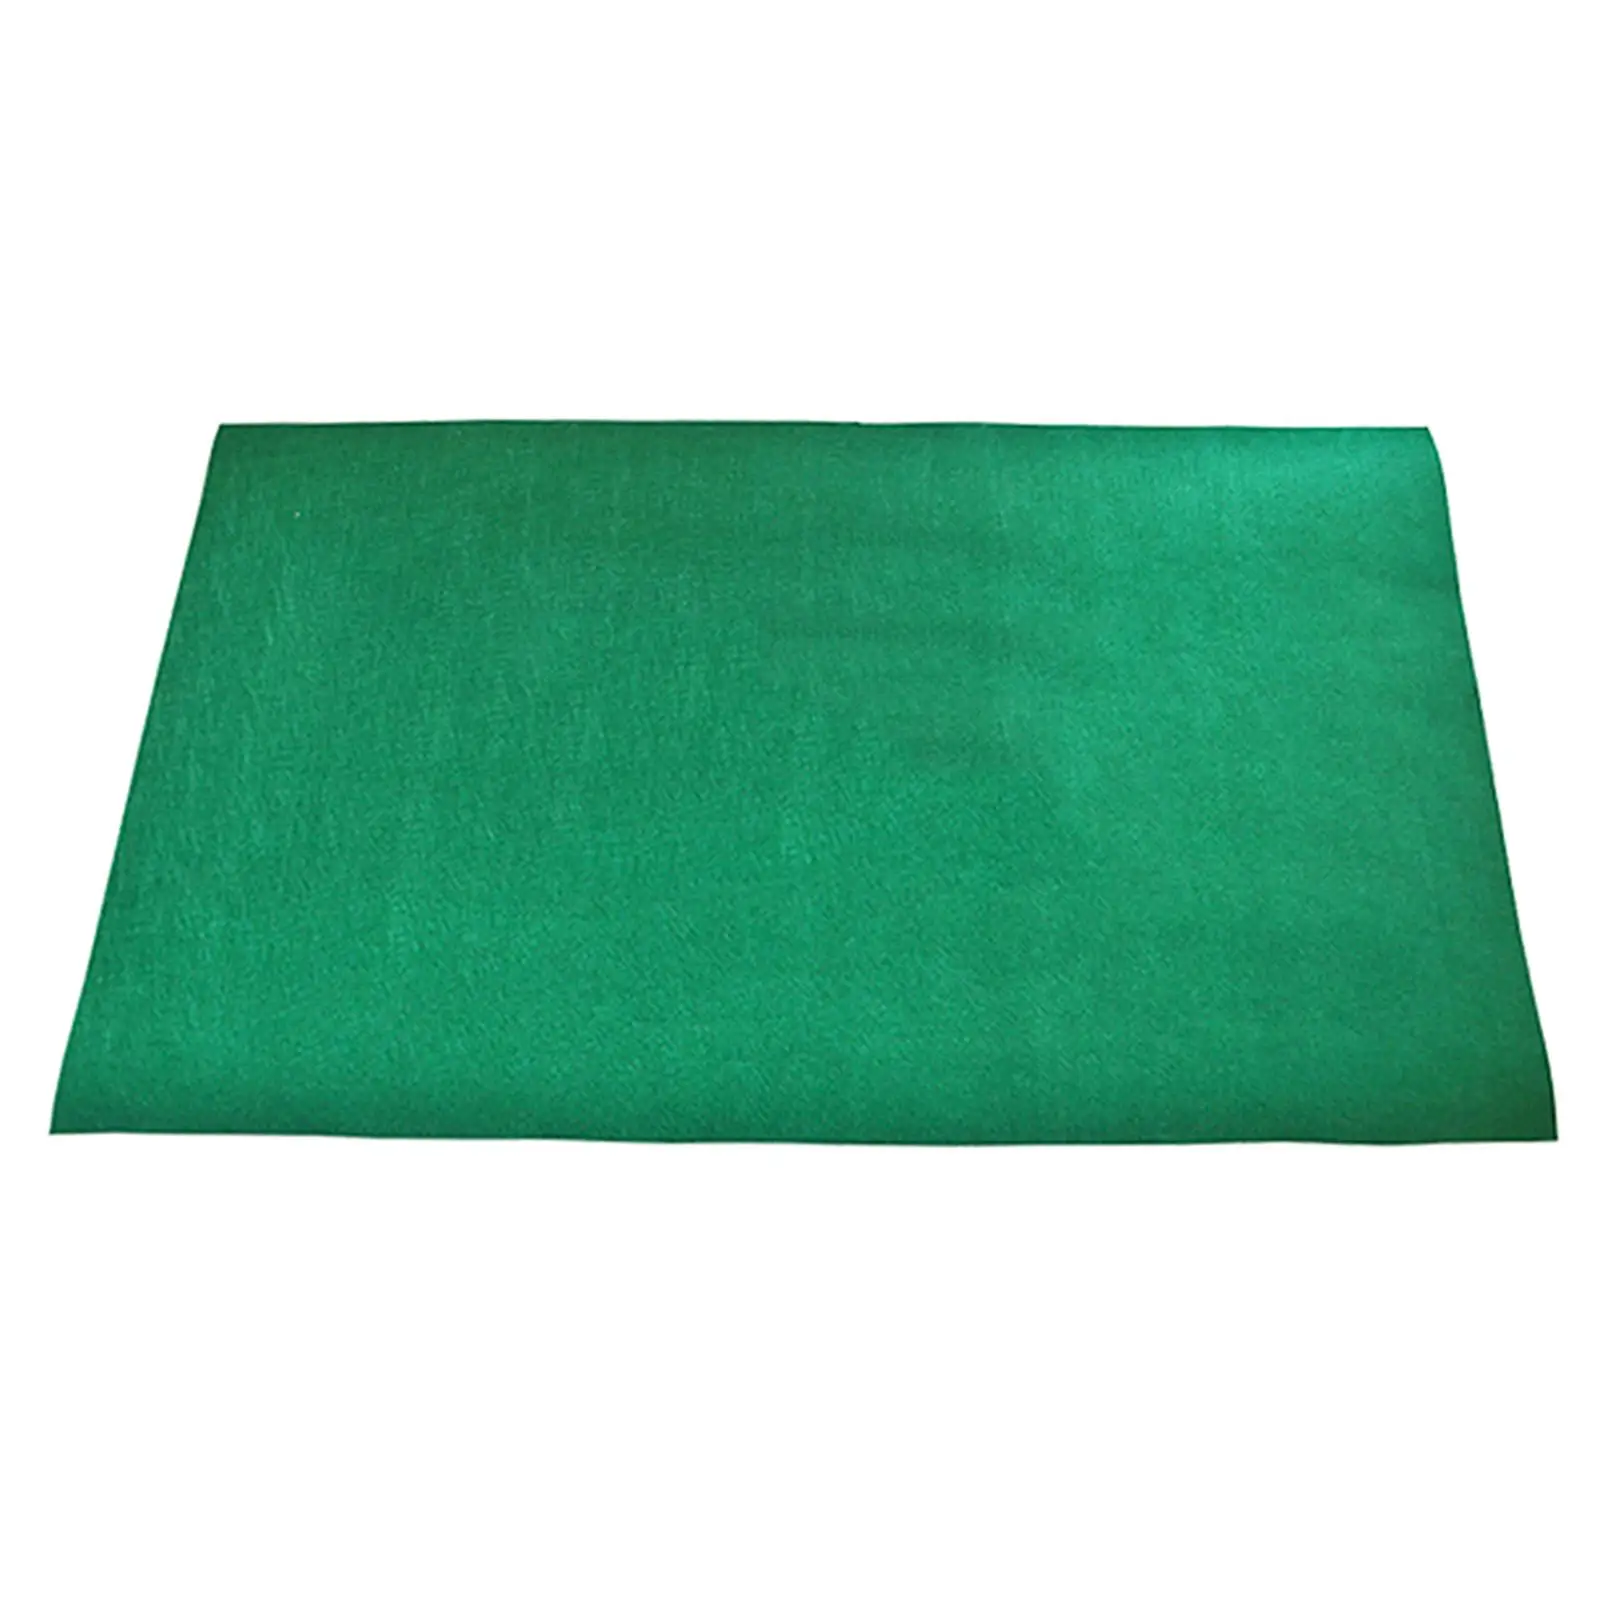 180  cm Texas Table Cloth Felt High Quality Nonwoven Mat